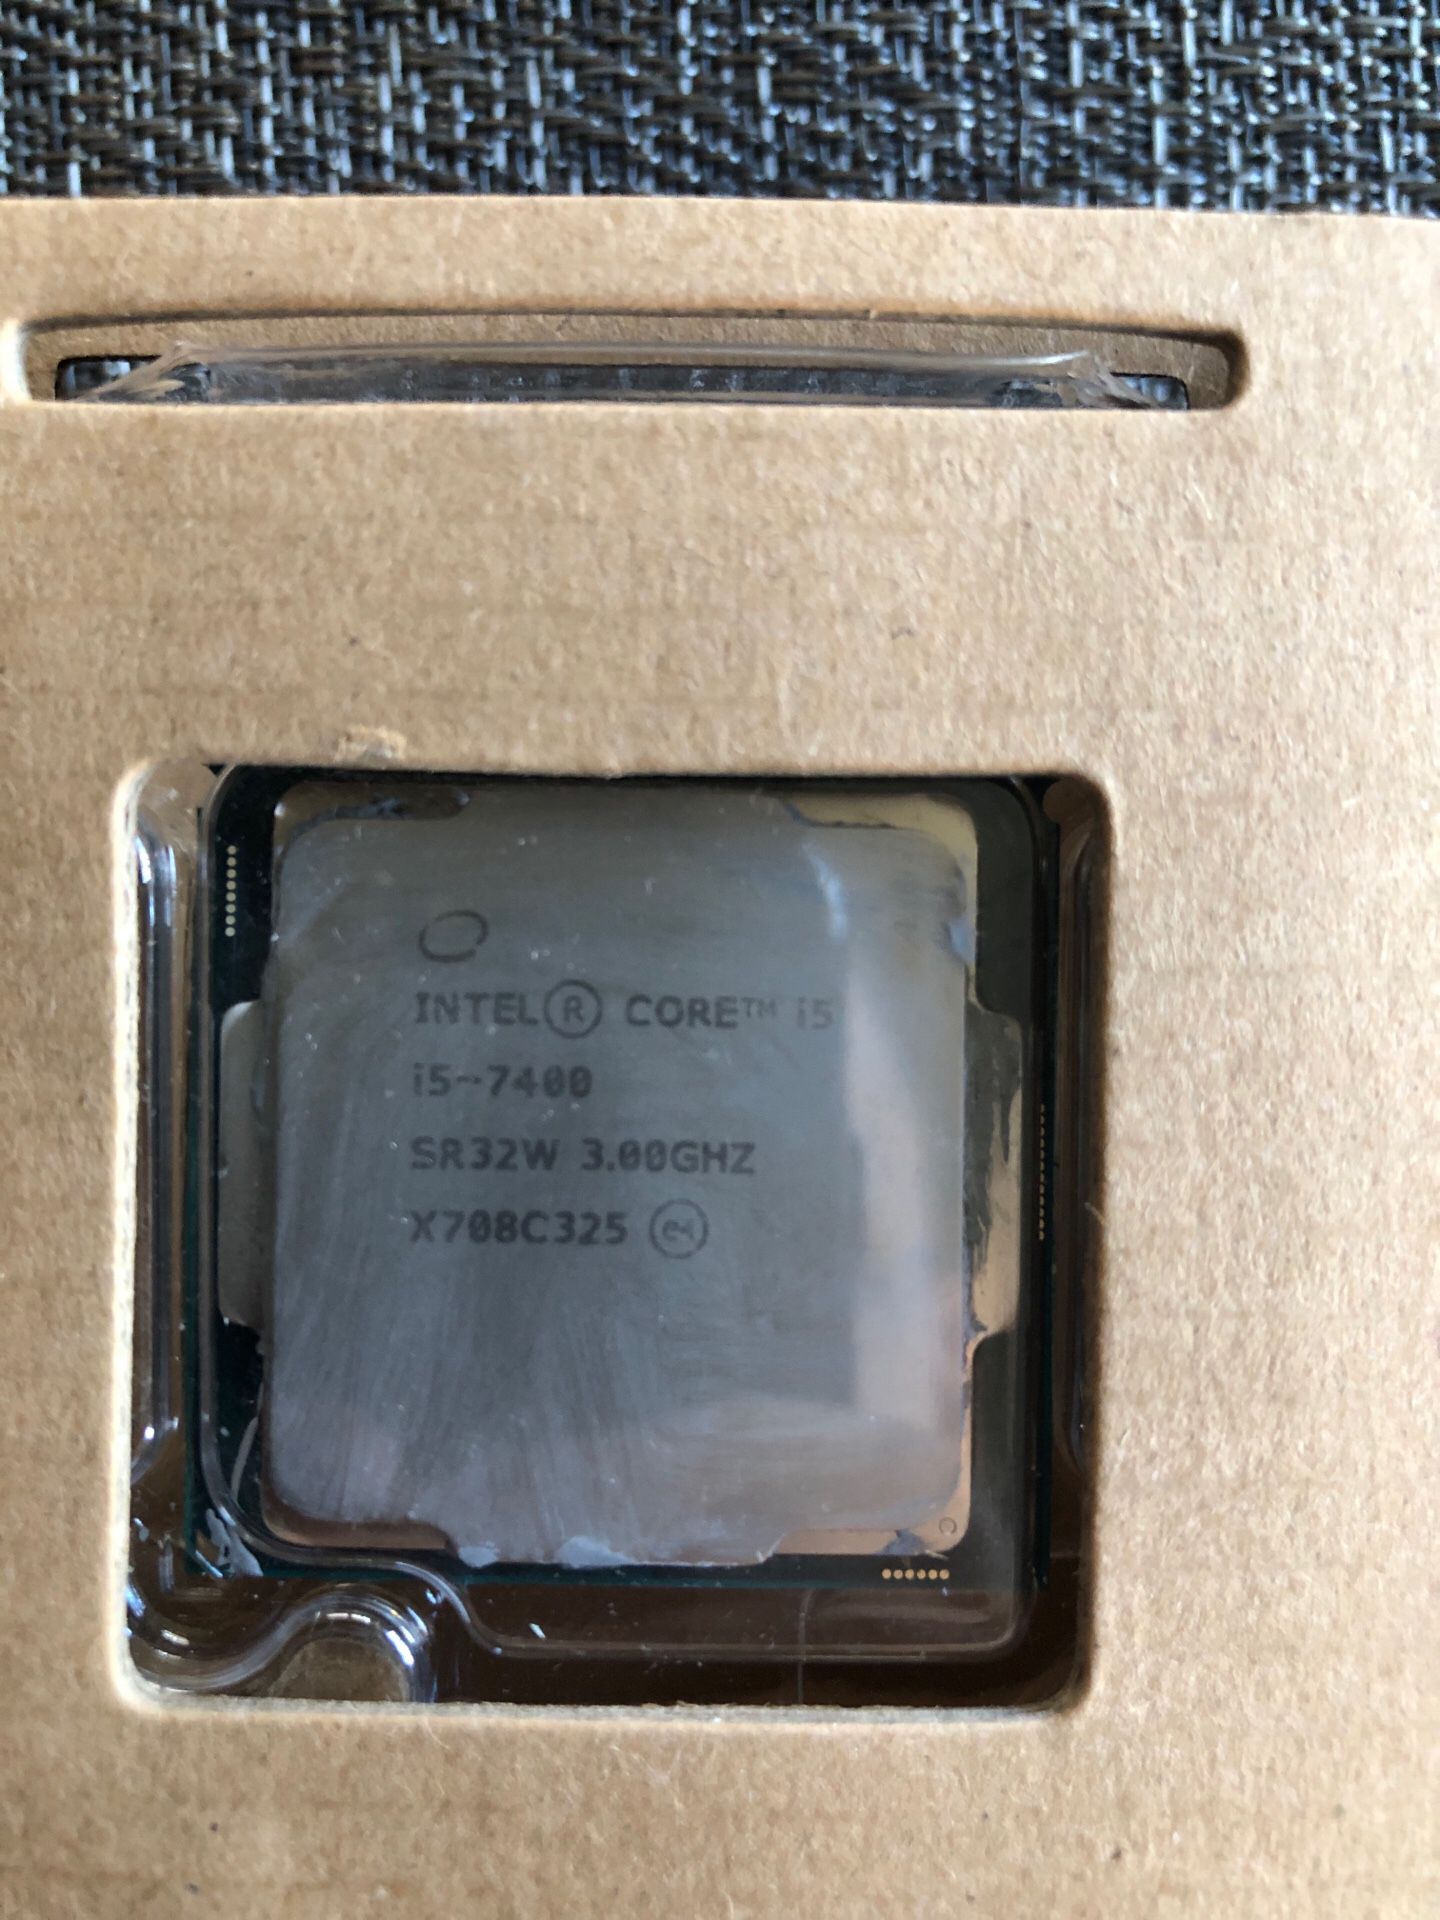 Intel core i5 7400 3ghz quad core (socket 1151)